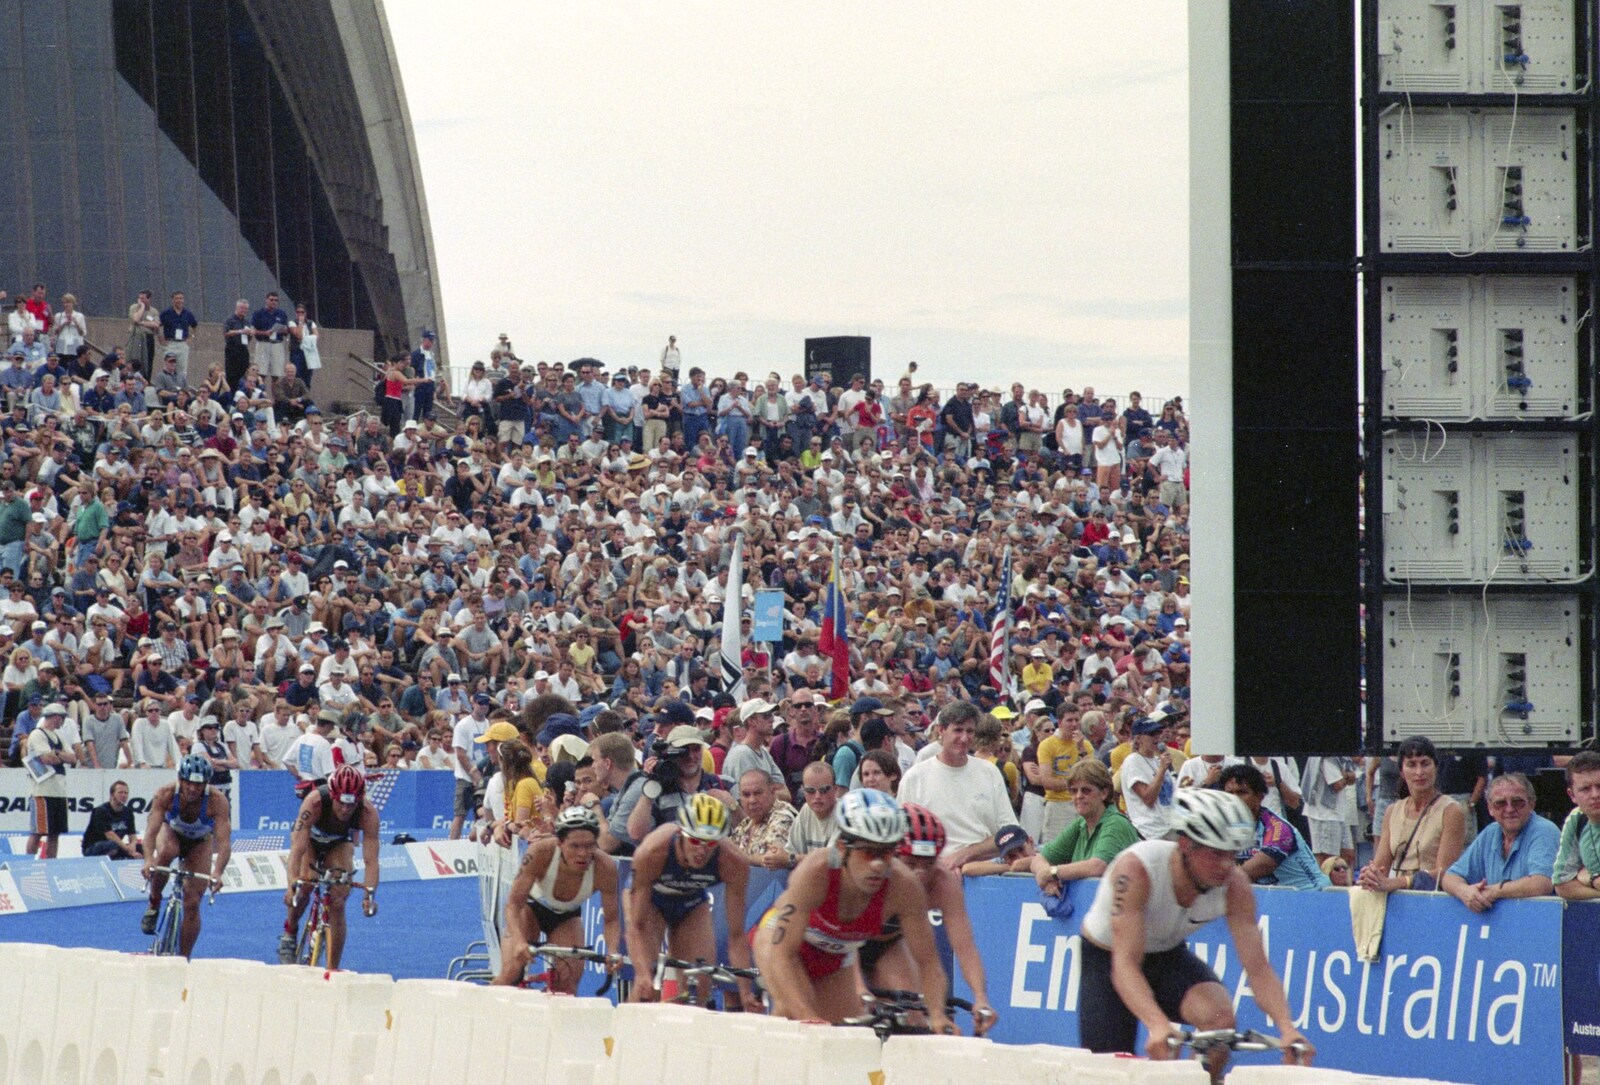 The crowds outside the opera house from Sydney Triathlon, Sydney, Australia - 16th April 2000